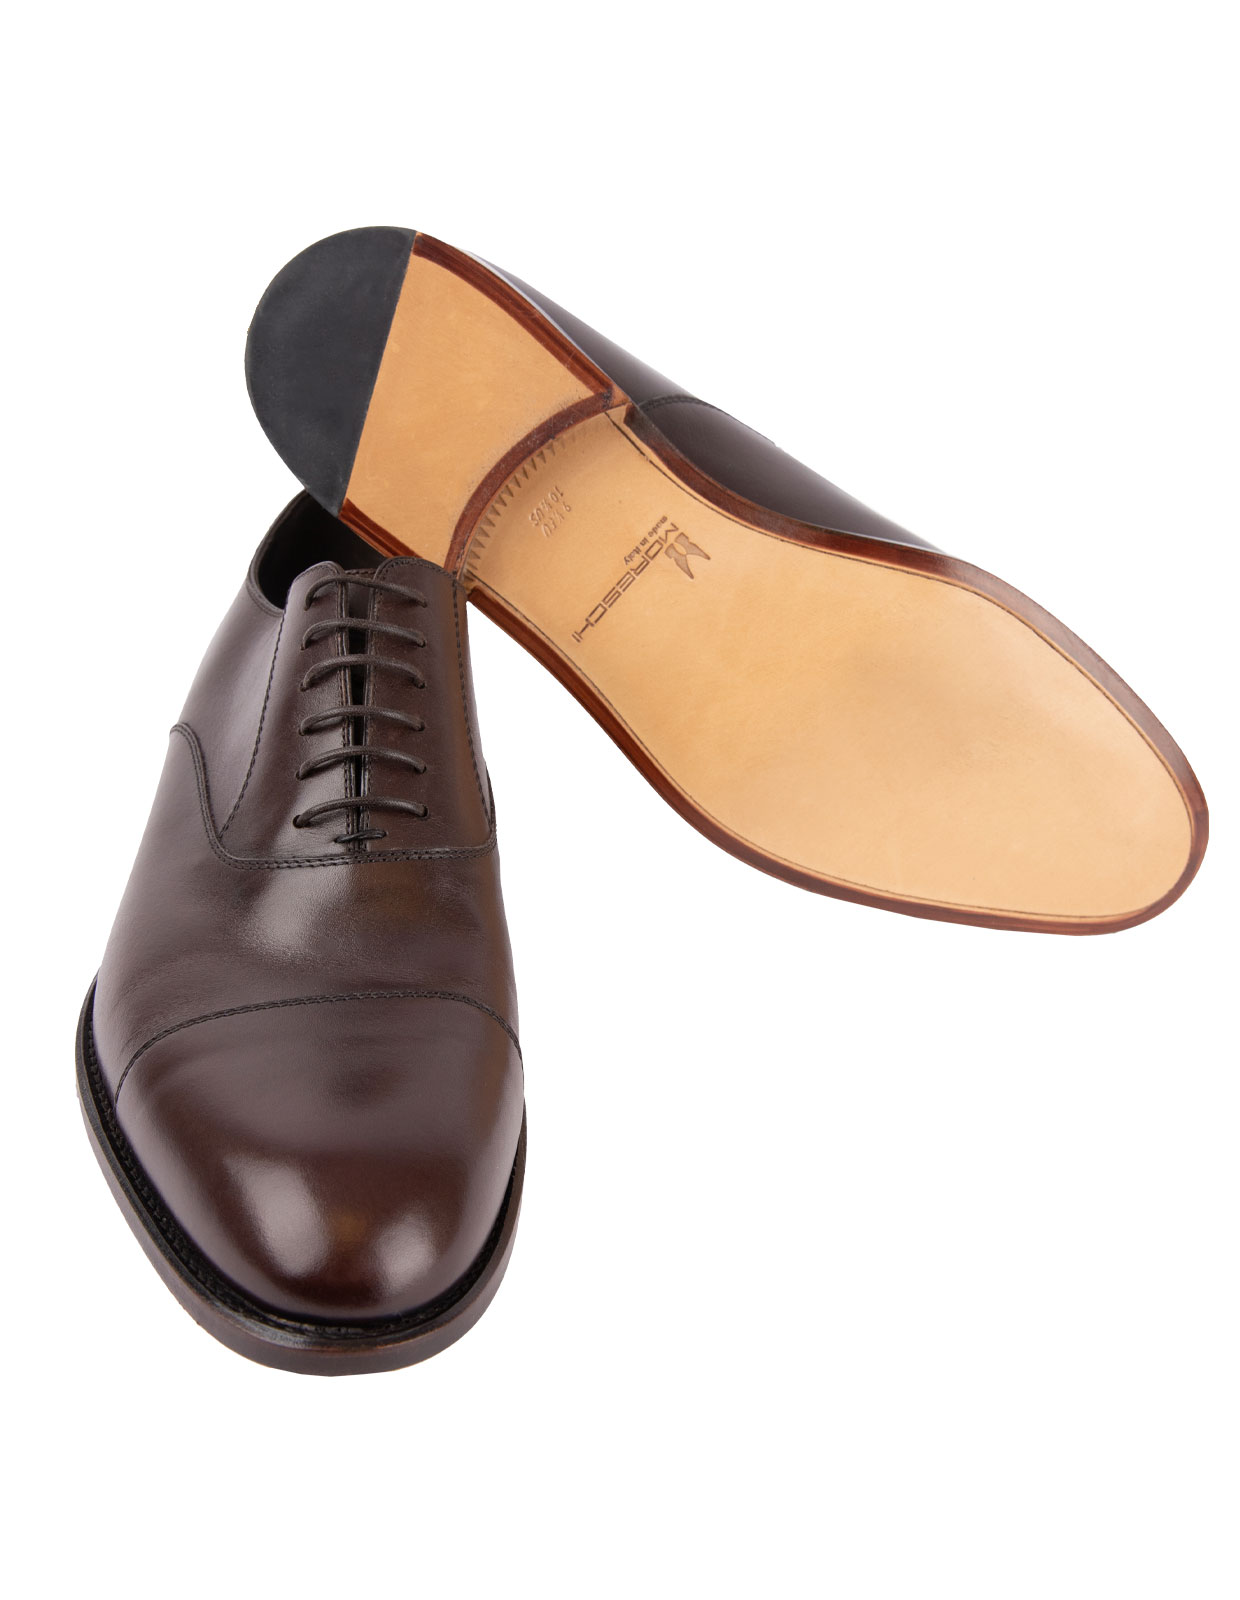 New York Oxford Shoes Calfskin Brown Stl 10.5